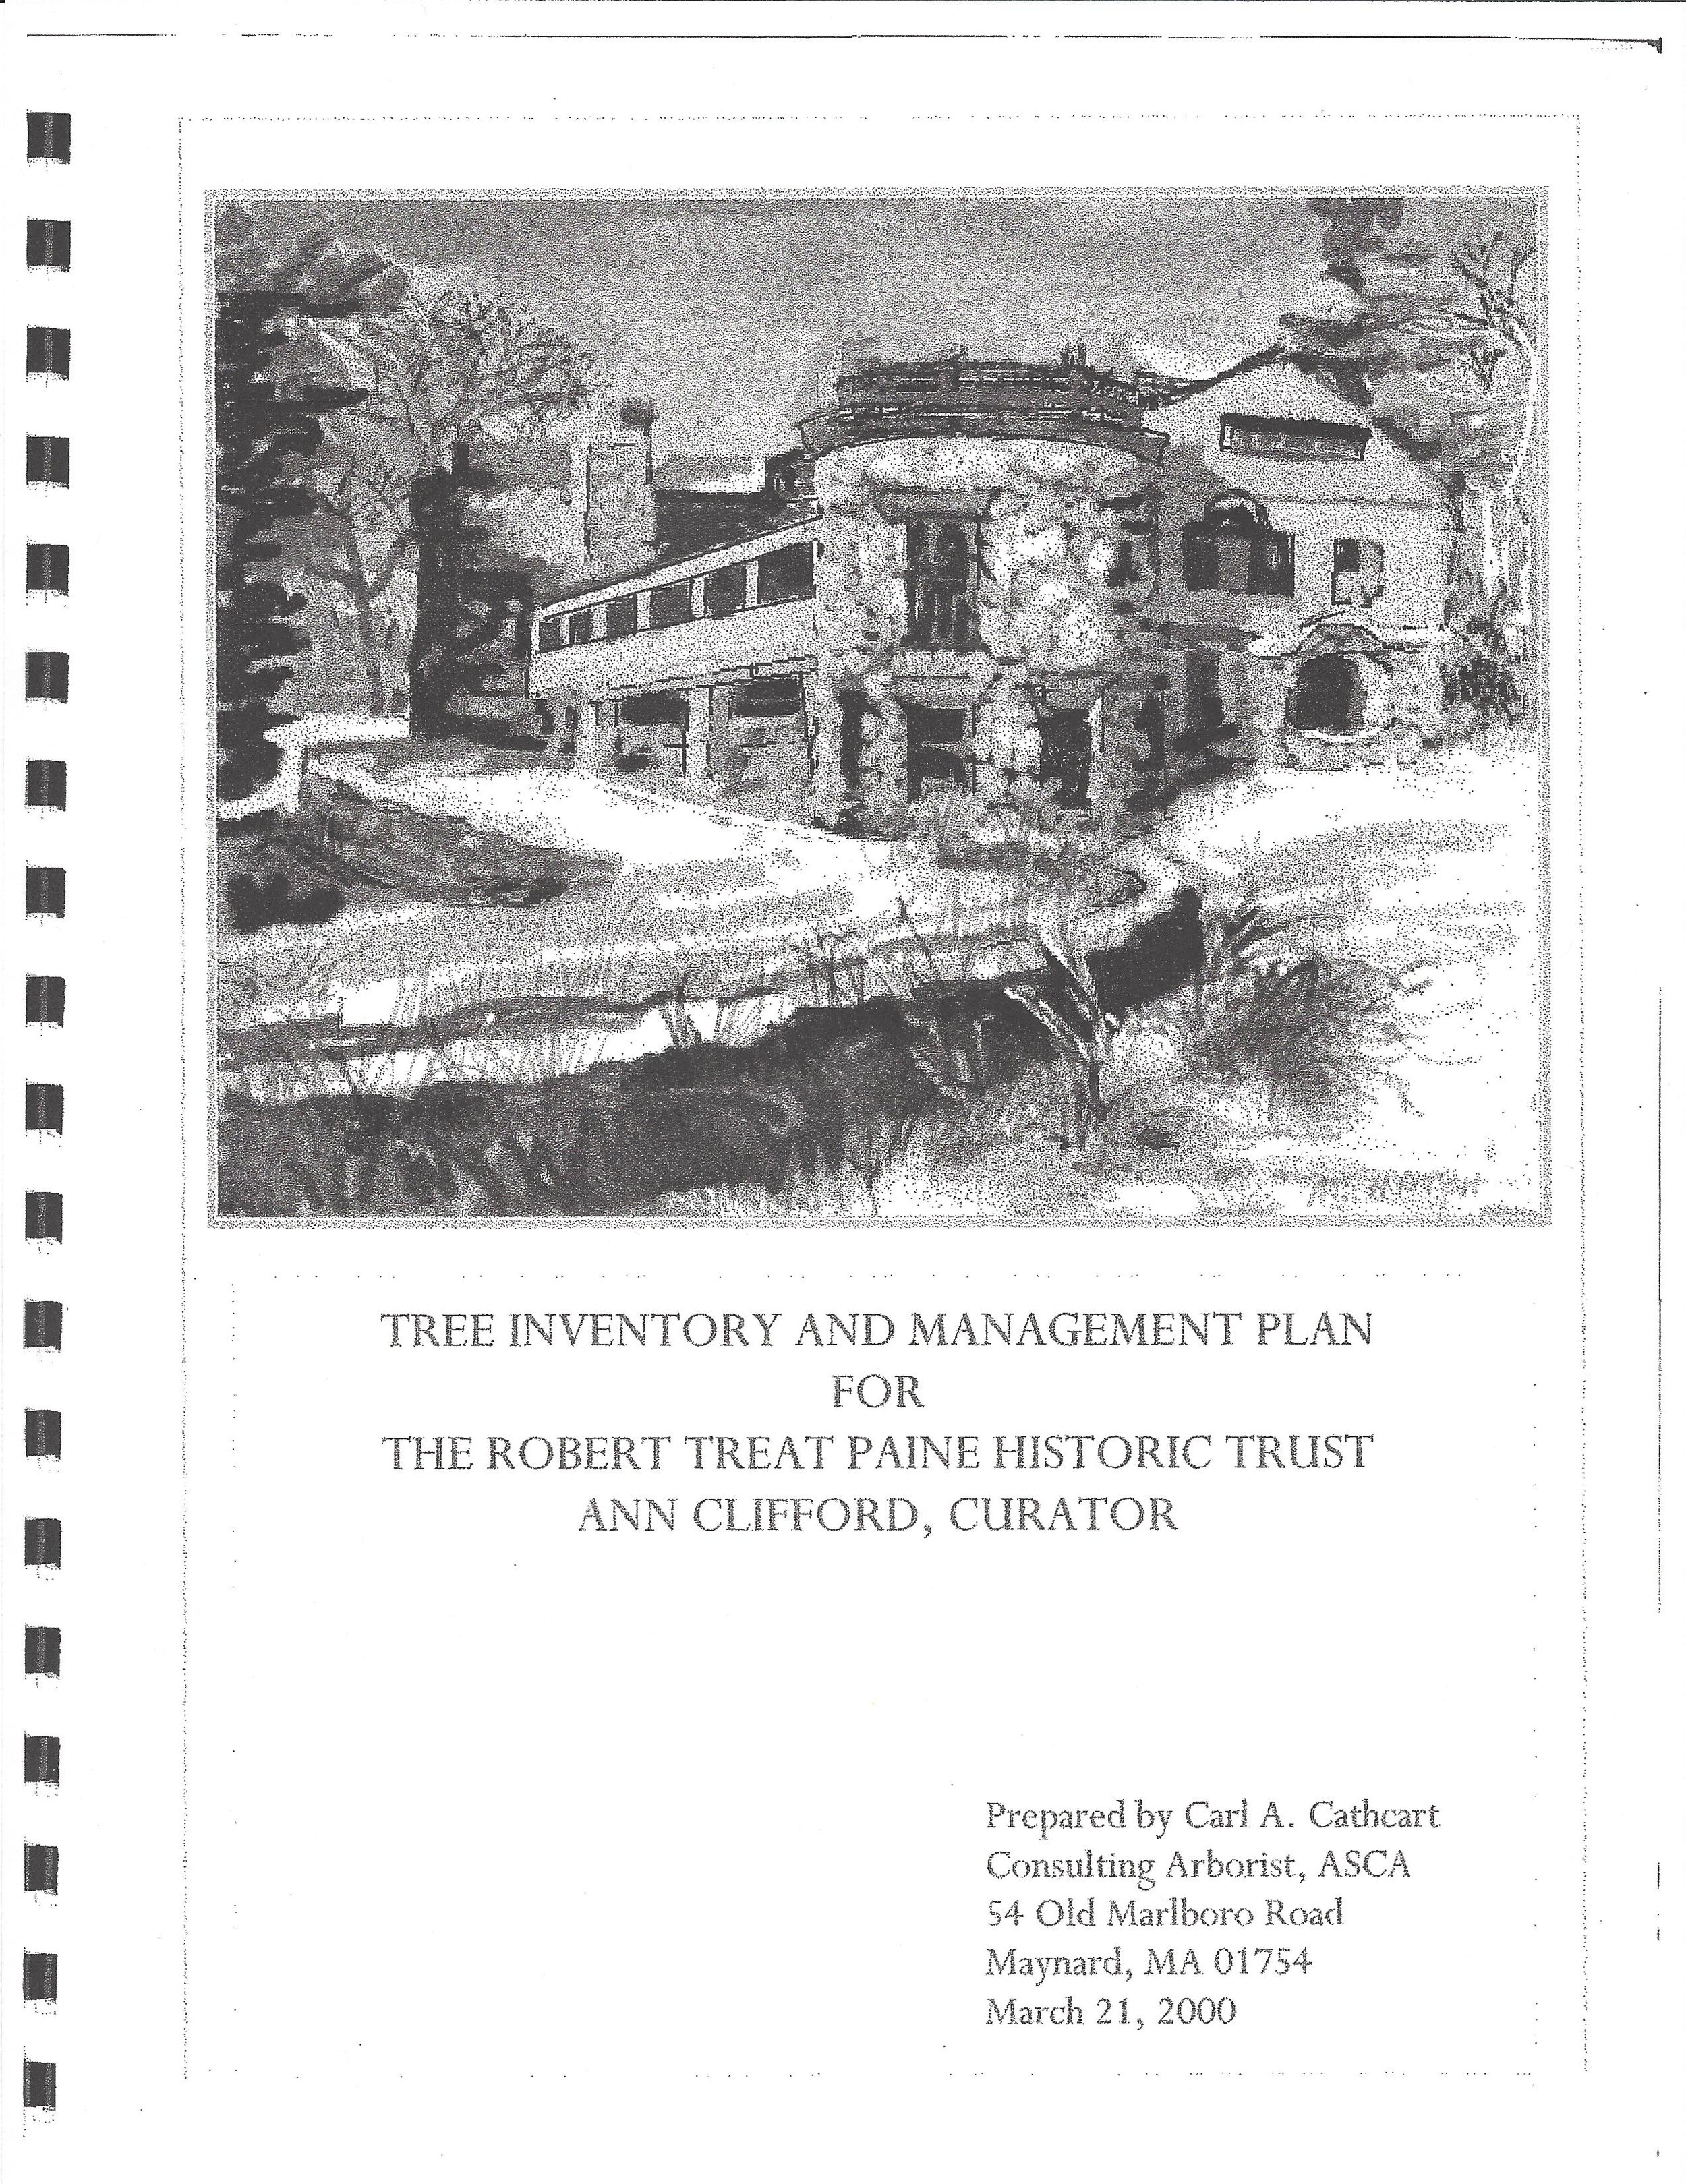 Tree Inventory & Management Plan, 2000